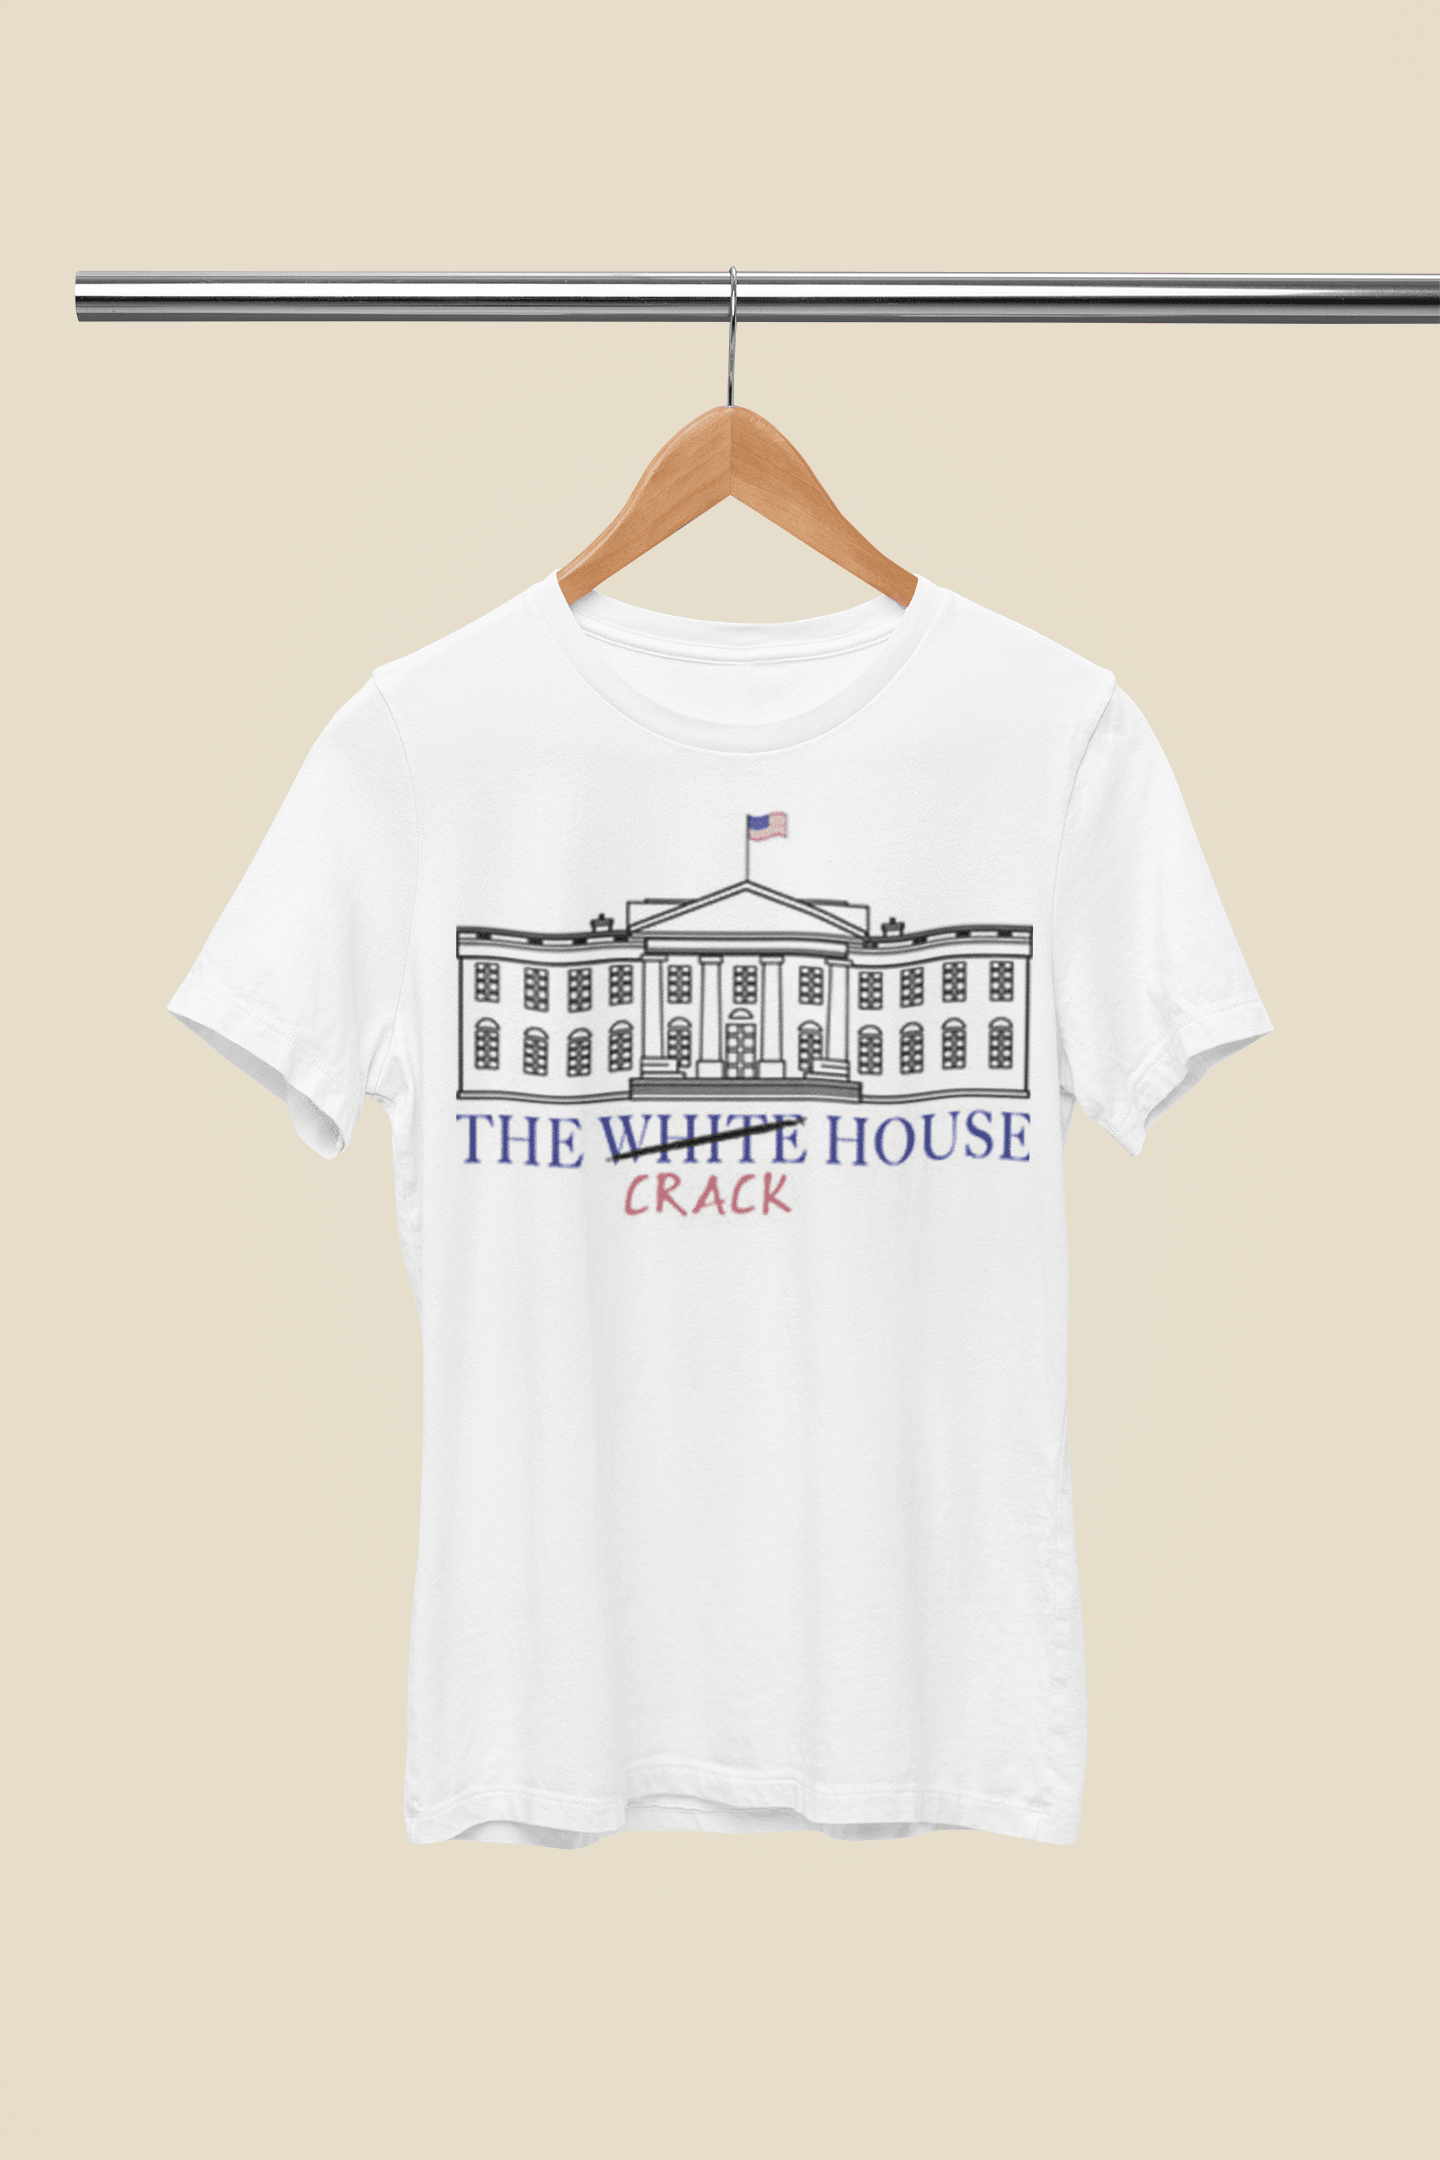 Top Koala Softstyle T-shirt The White/Crack House Unisex Tee - TopKoalaTee